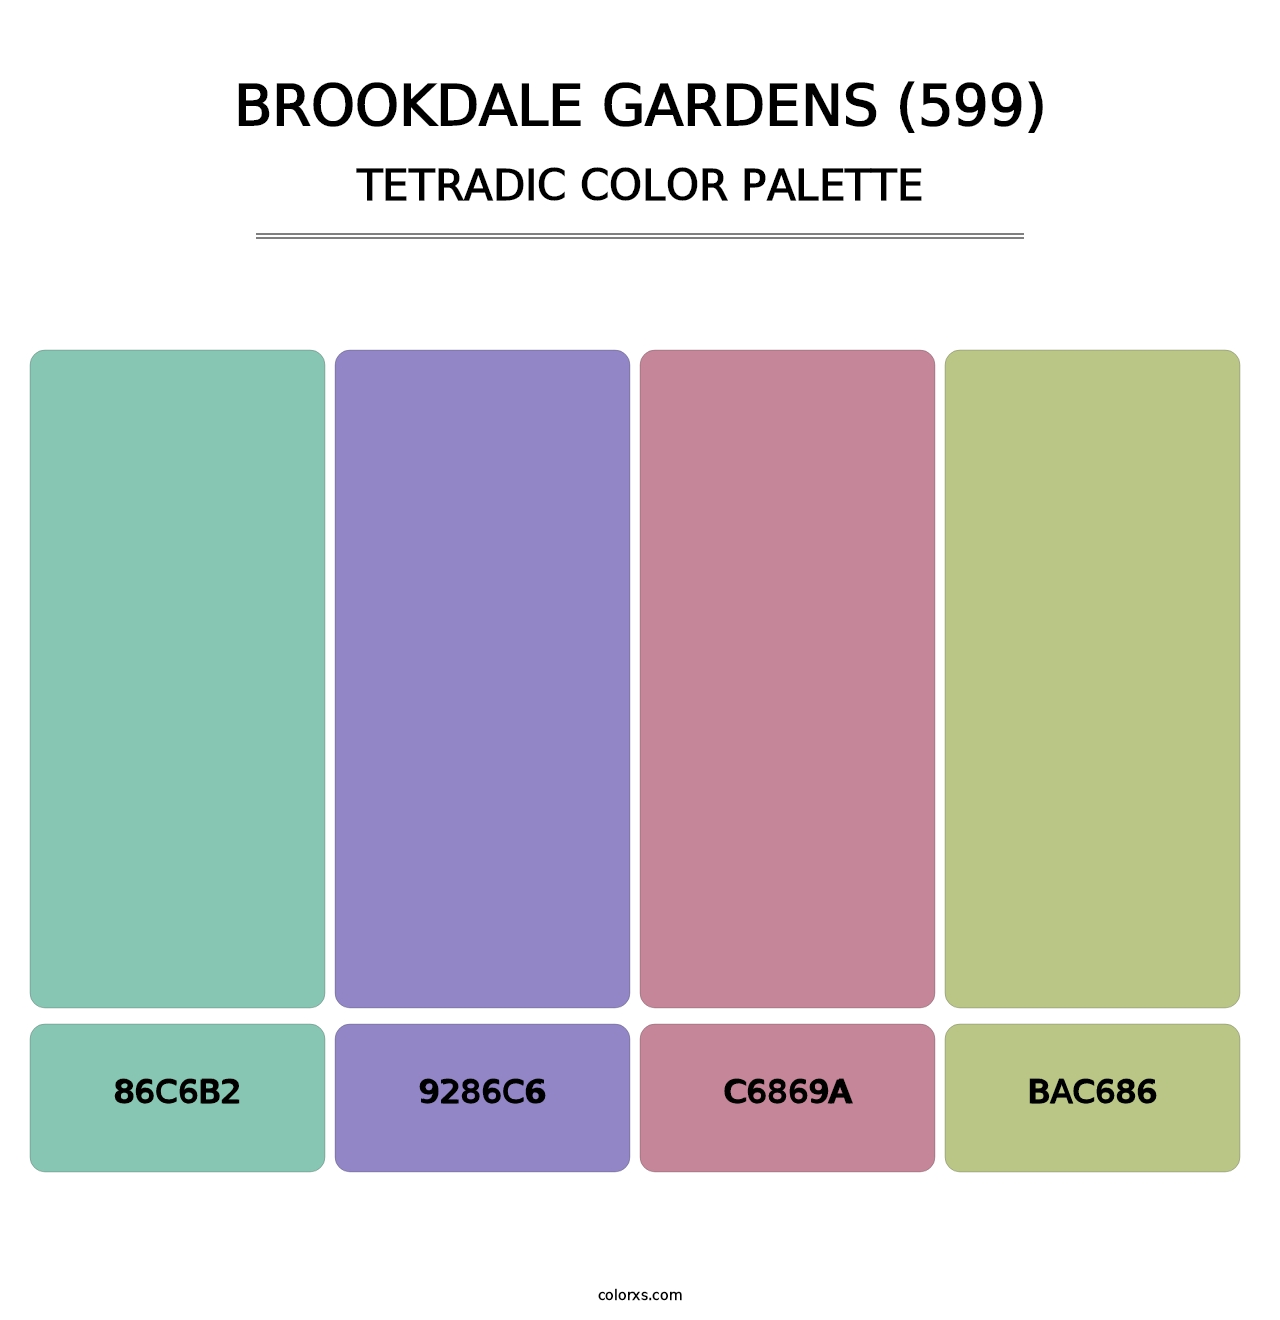 Brookdale Gardens (599) - Tetradic Color Palette